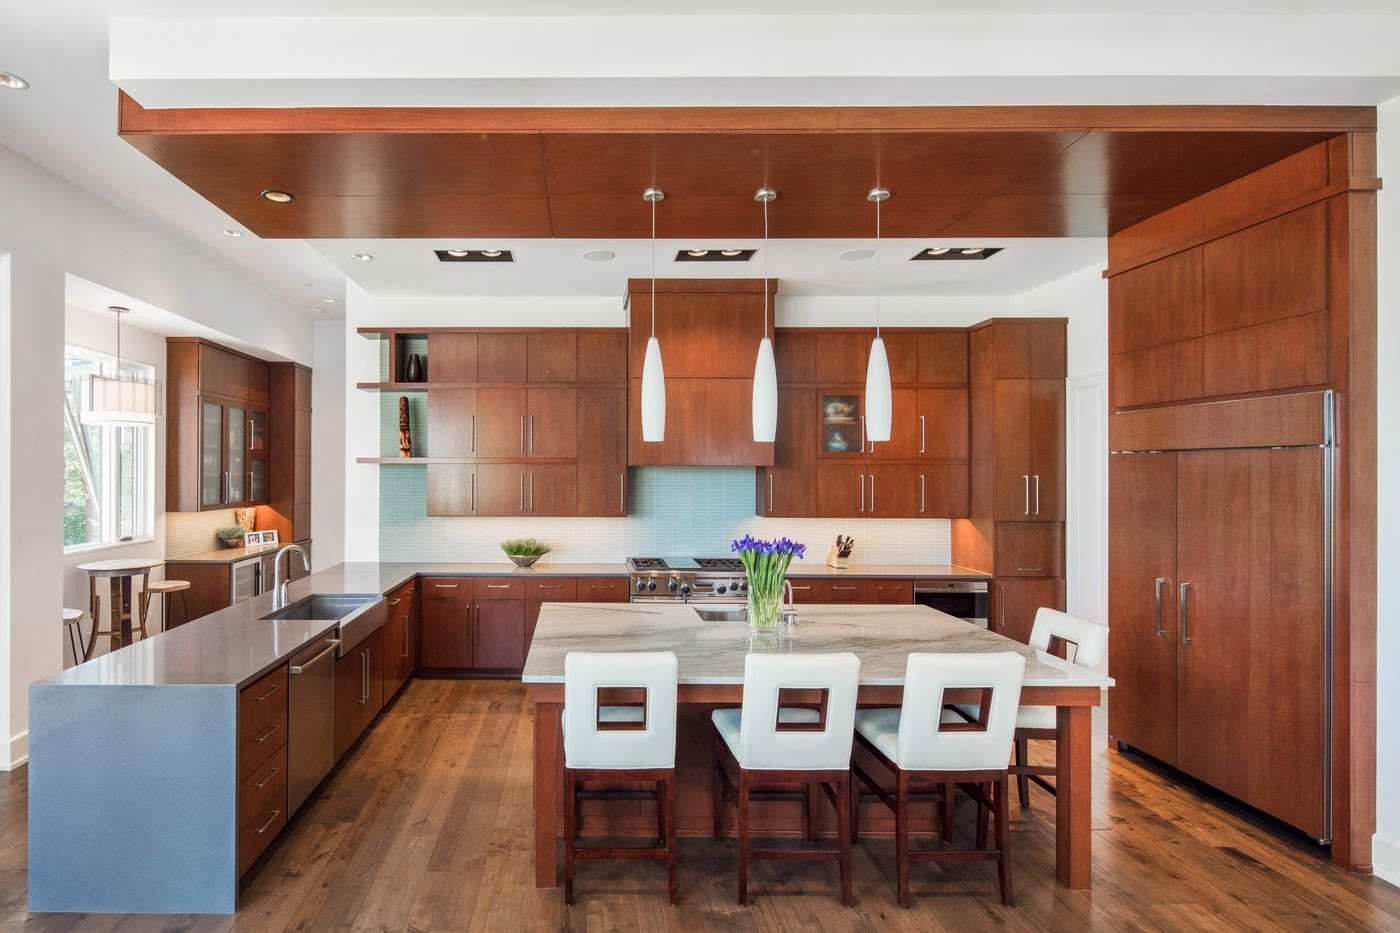 Kitchen in Modern Home by Cornerstone Archicture